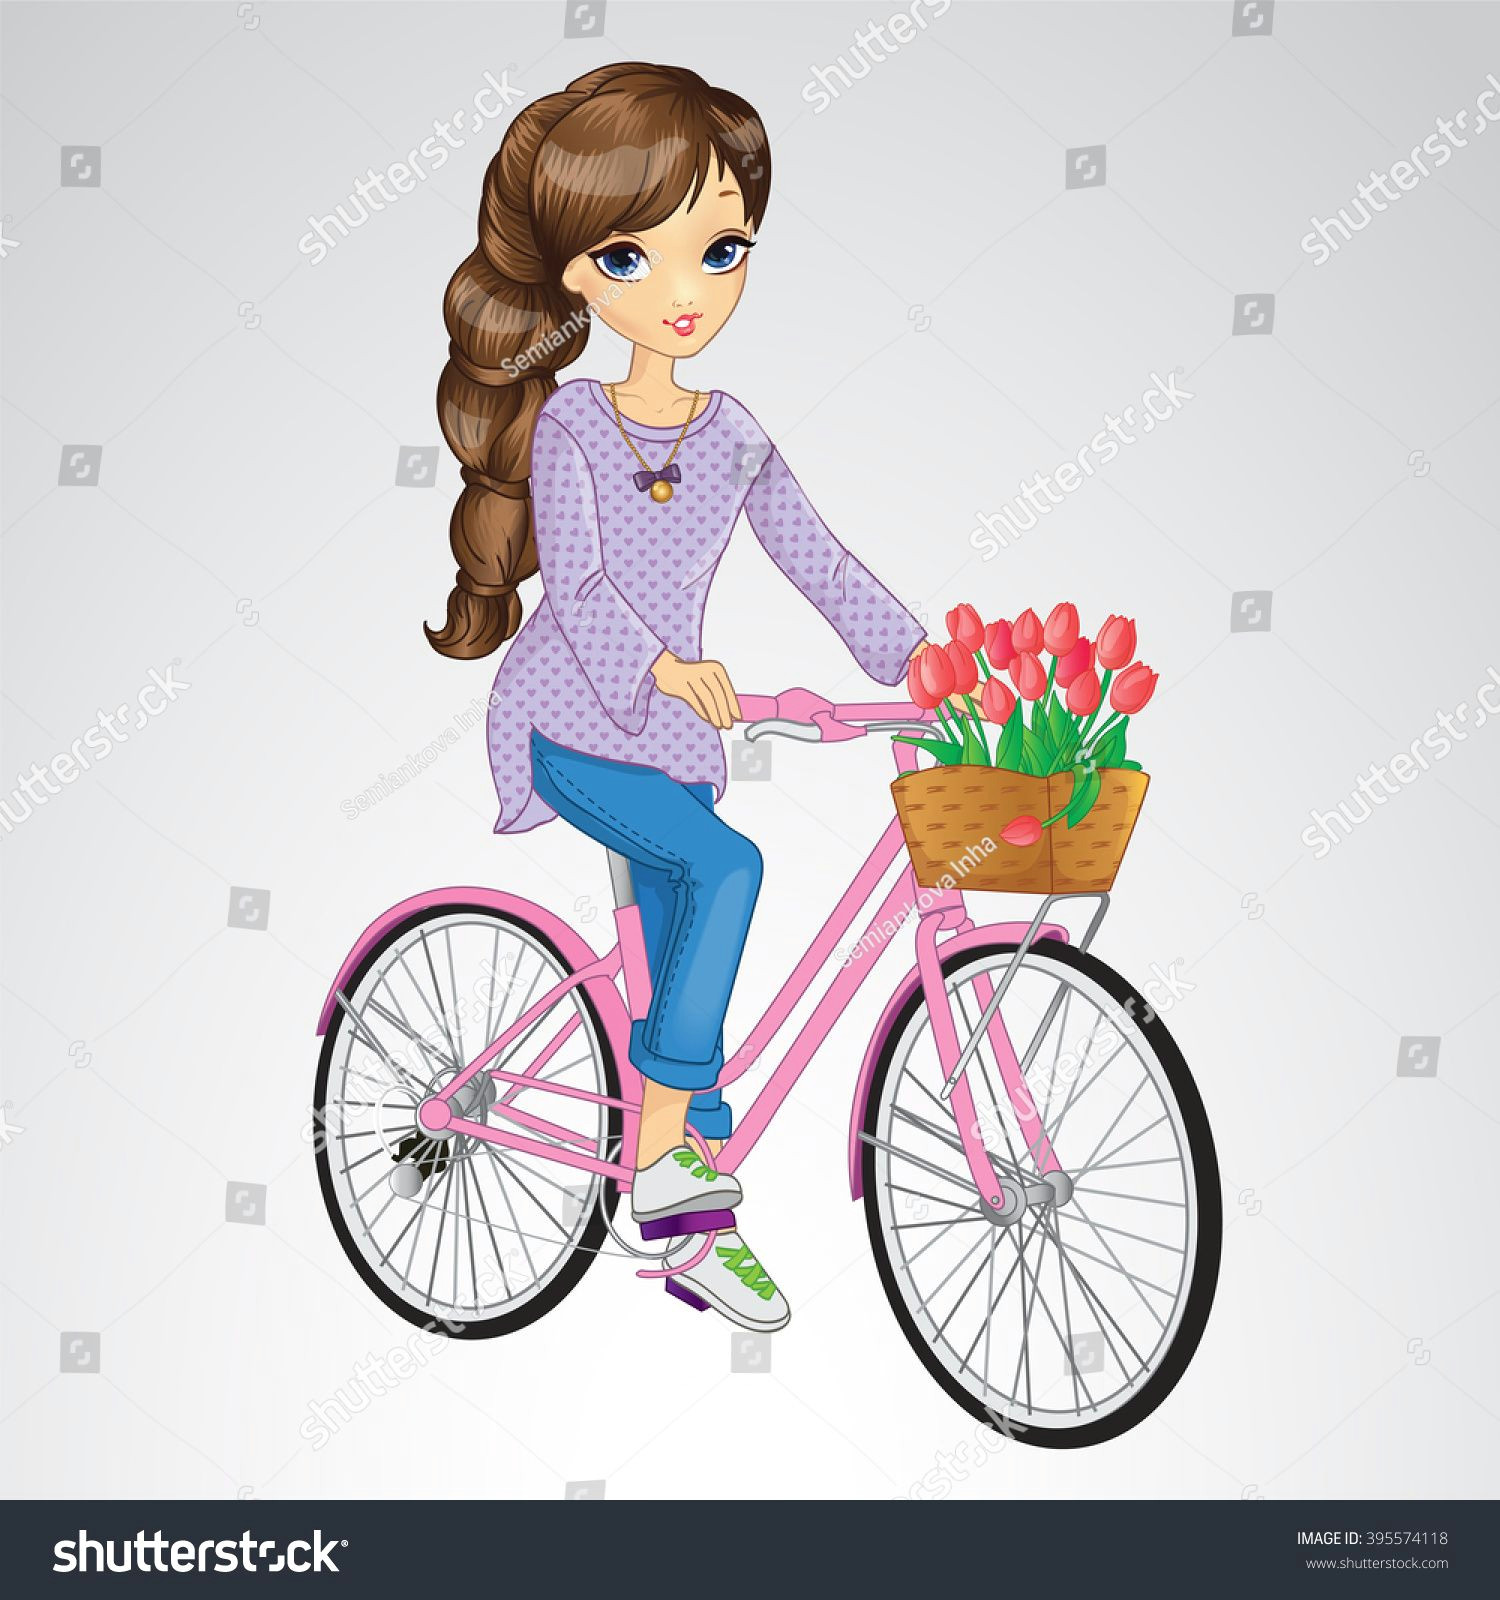 Drawing Of Girl On Bike Girl Riding On Pink Bicycle Cycle Shahi Swari Pinterest